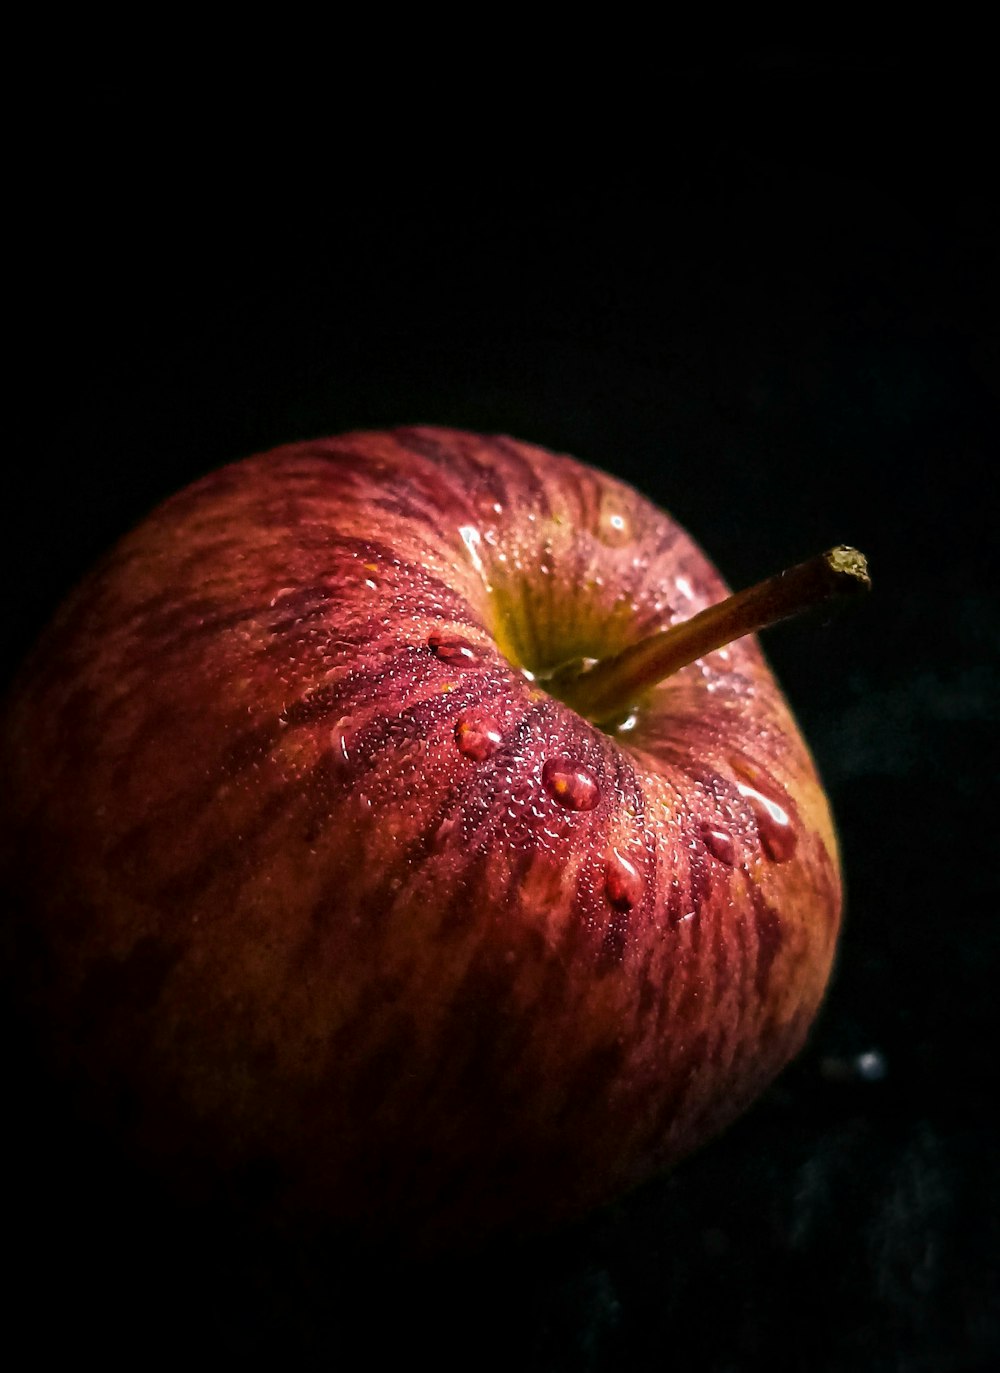 Red apple fruit with black background photo – Free Chhattisgarh Image on  Unsplash